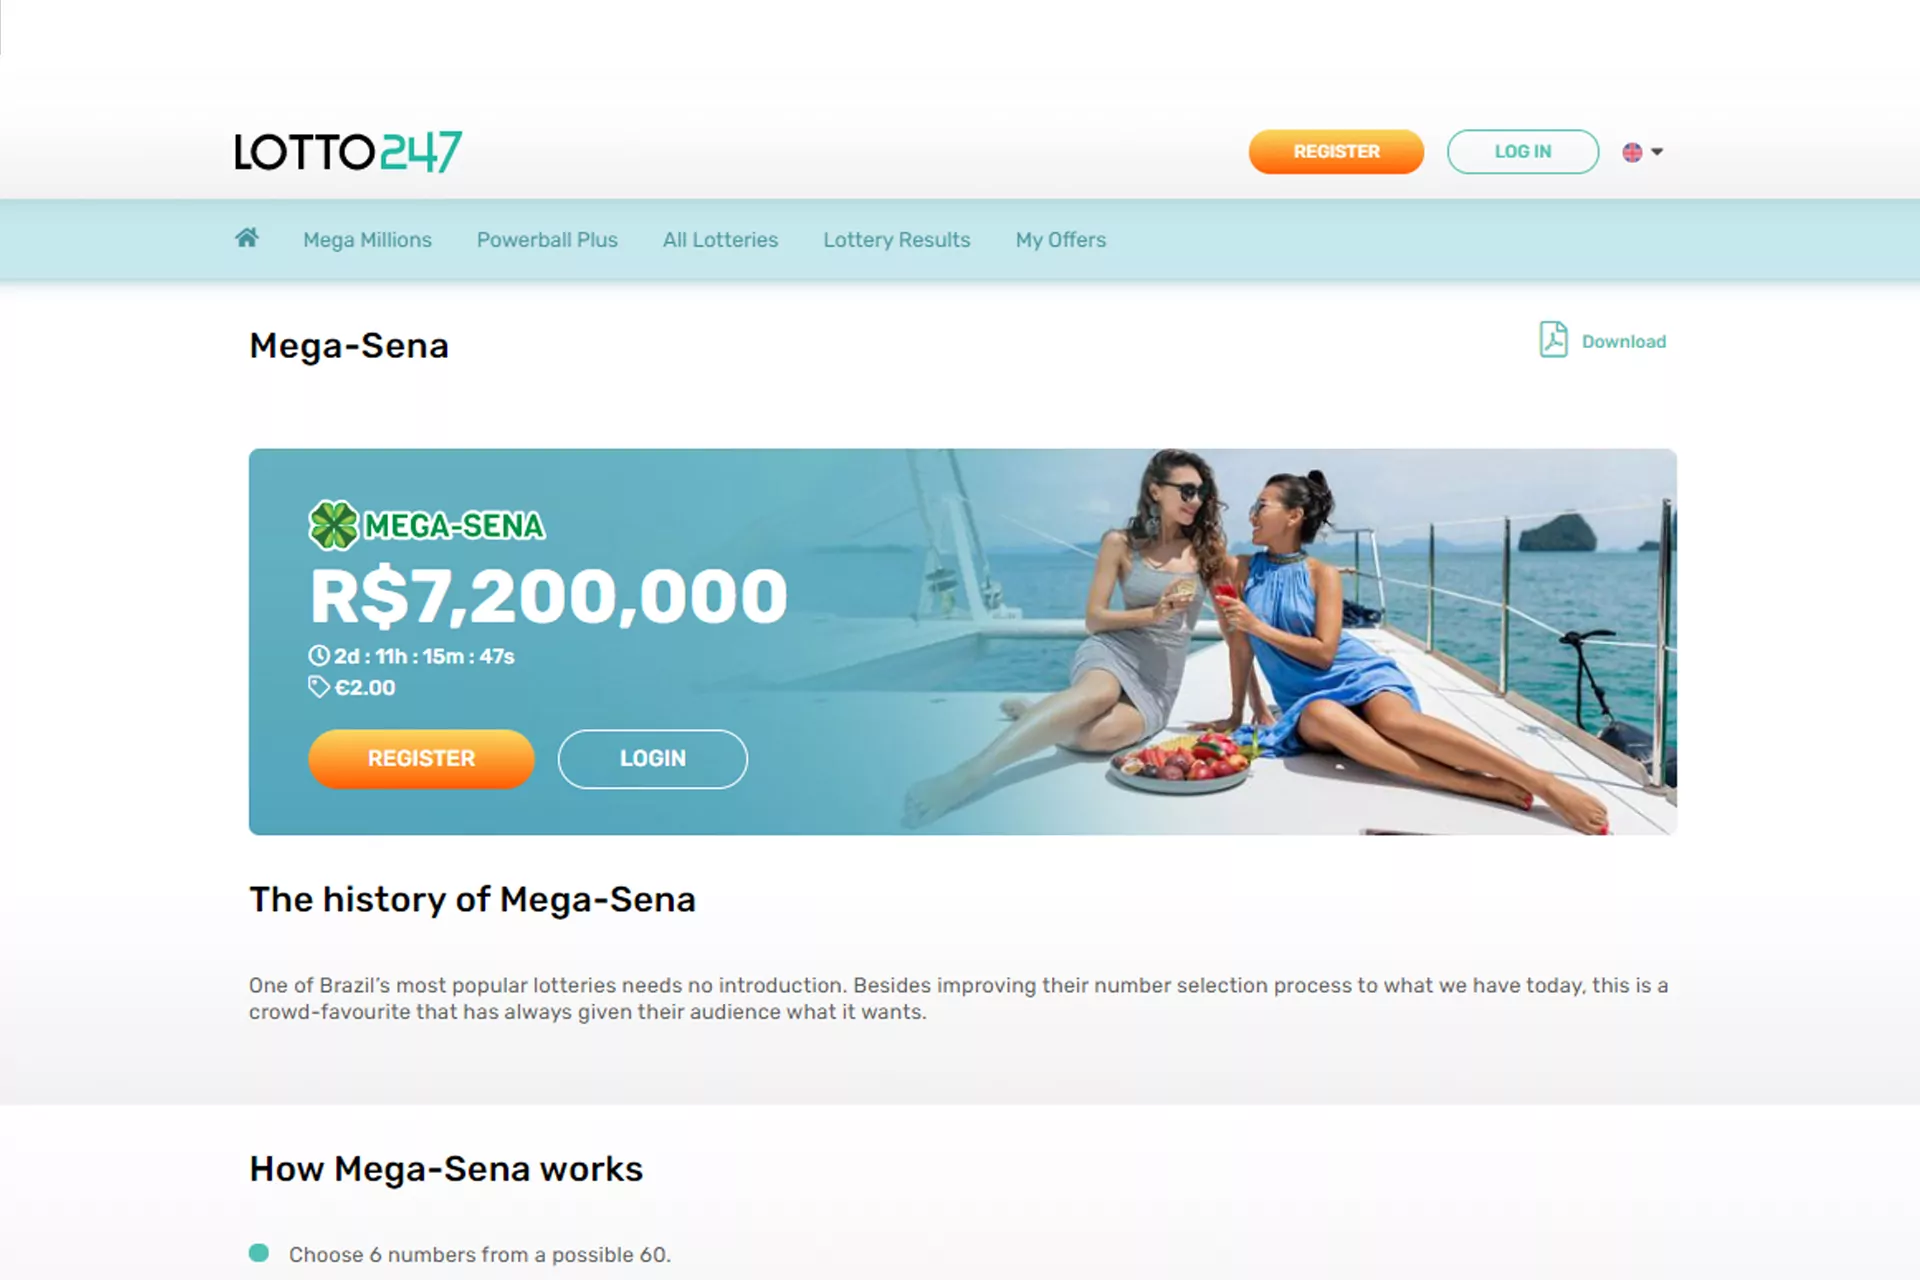 Mega-Sena allows you to win over 7 million Brazilian reals.